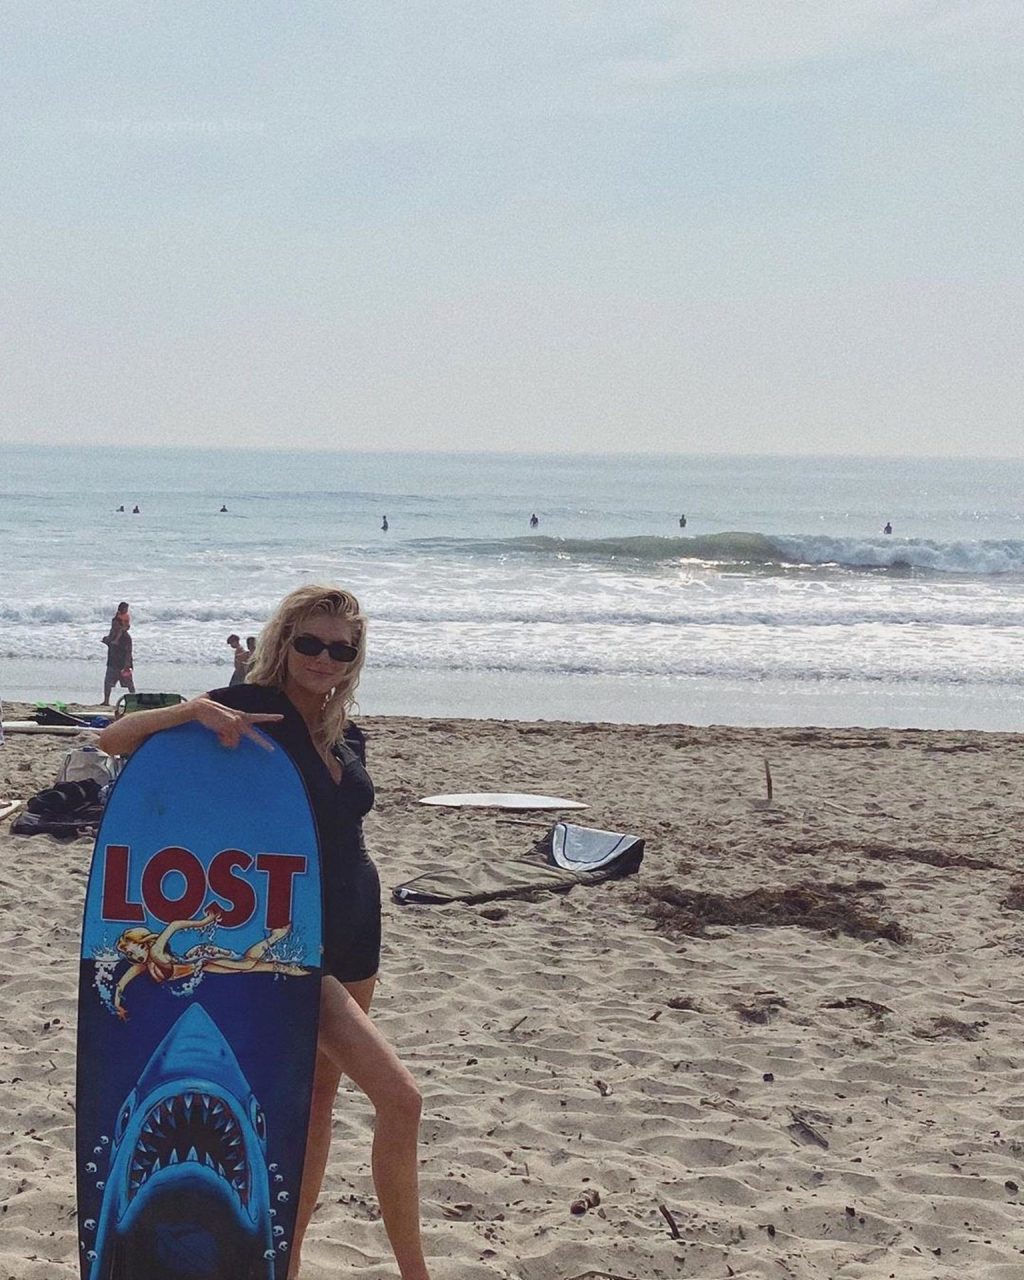 Charlotte McKinney Hits the Beach in a Green Bikini in LA (8 Photos)